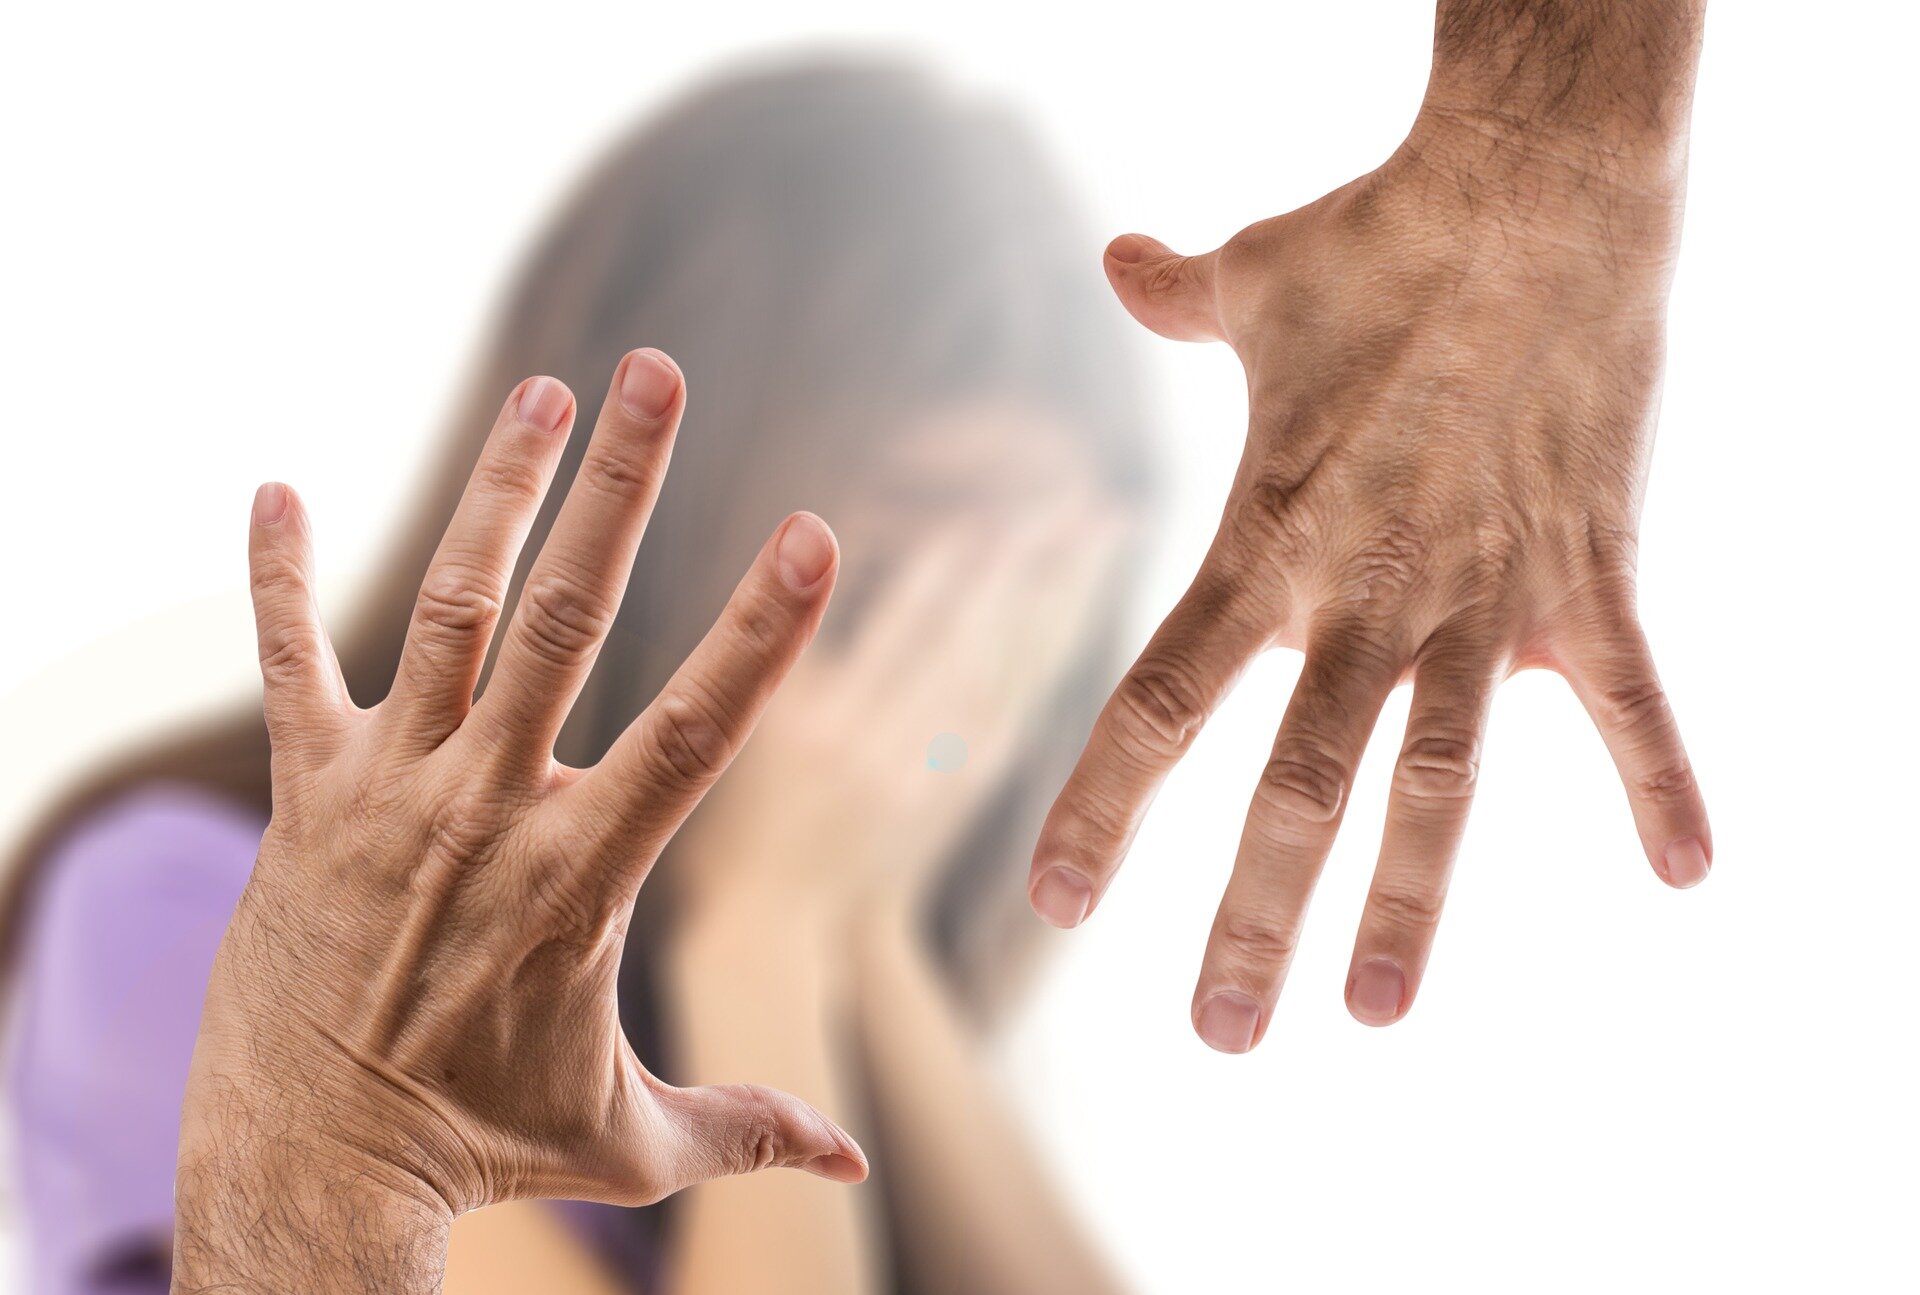 Report reveals billion-dollar toll of domestic violence in California